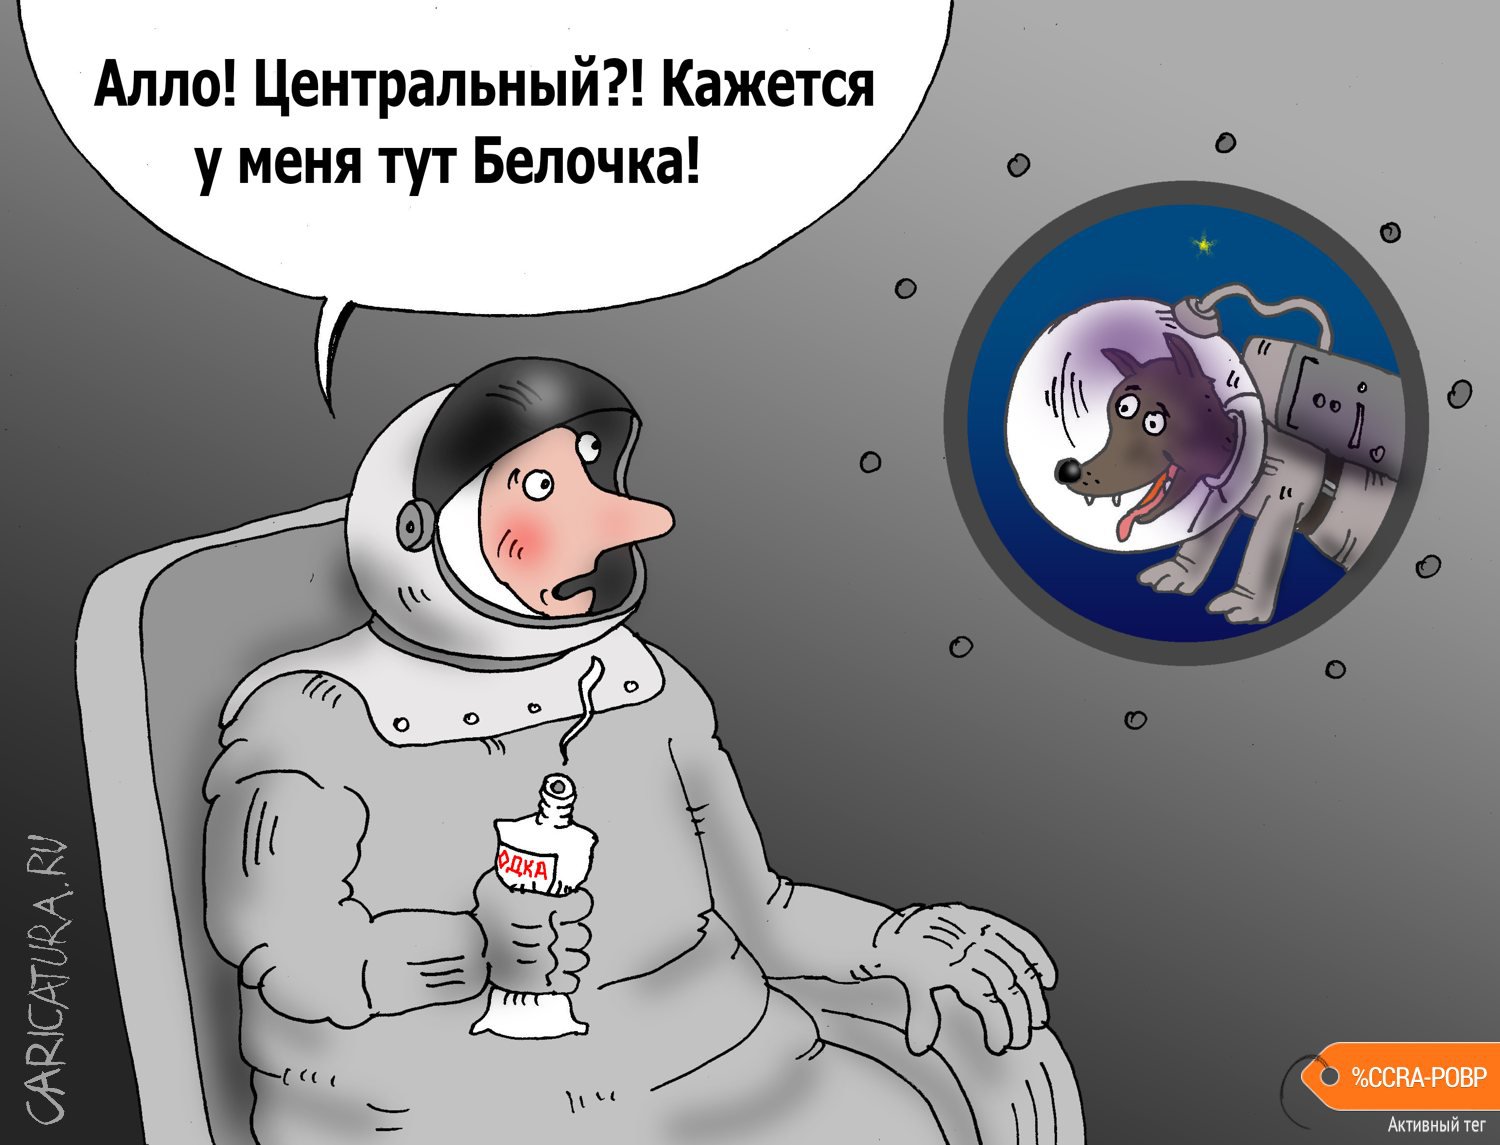 Карикатура "Белка в космосе", Валерий Тарасенко